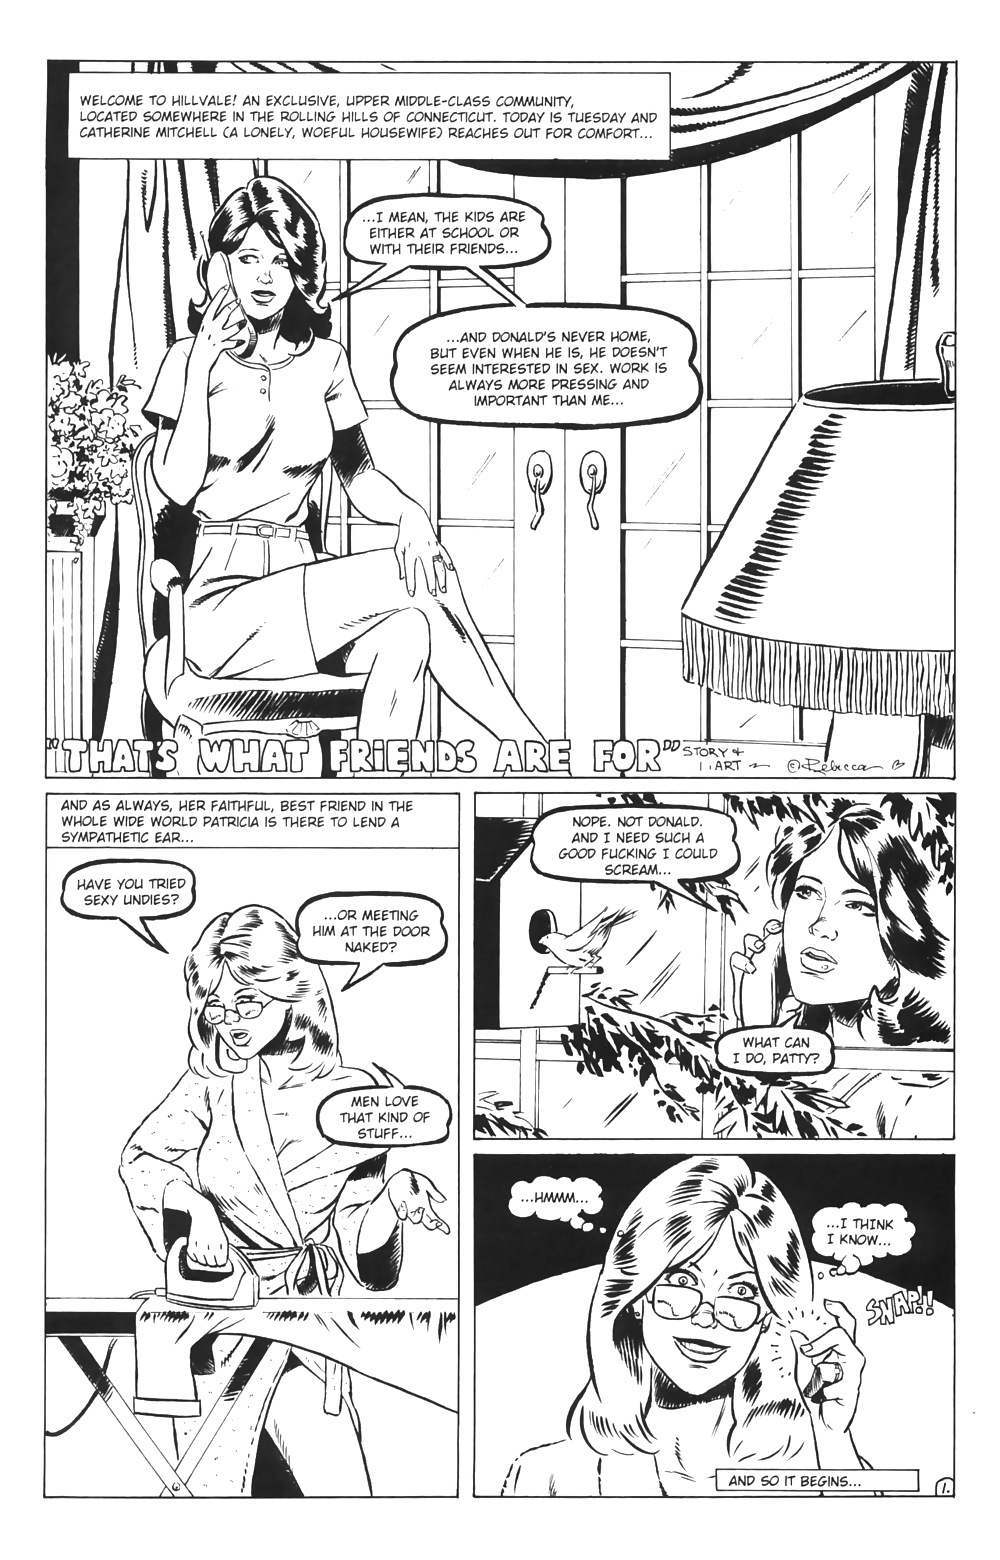 Hausfrauen Am Spiel # 01 - Eros-Comics Von Rebecca - April 2002 #36196478